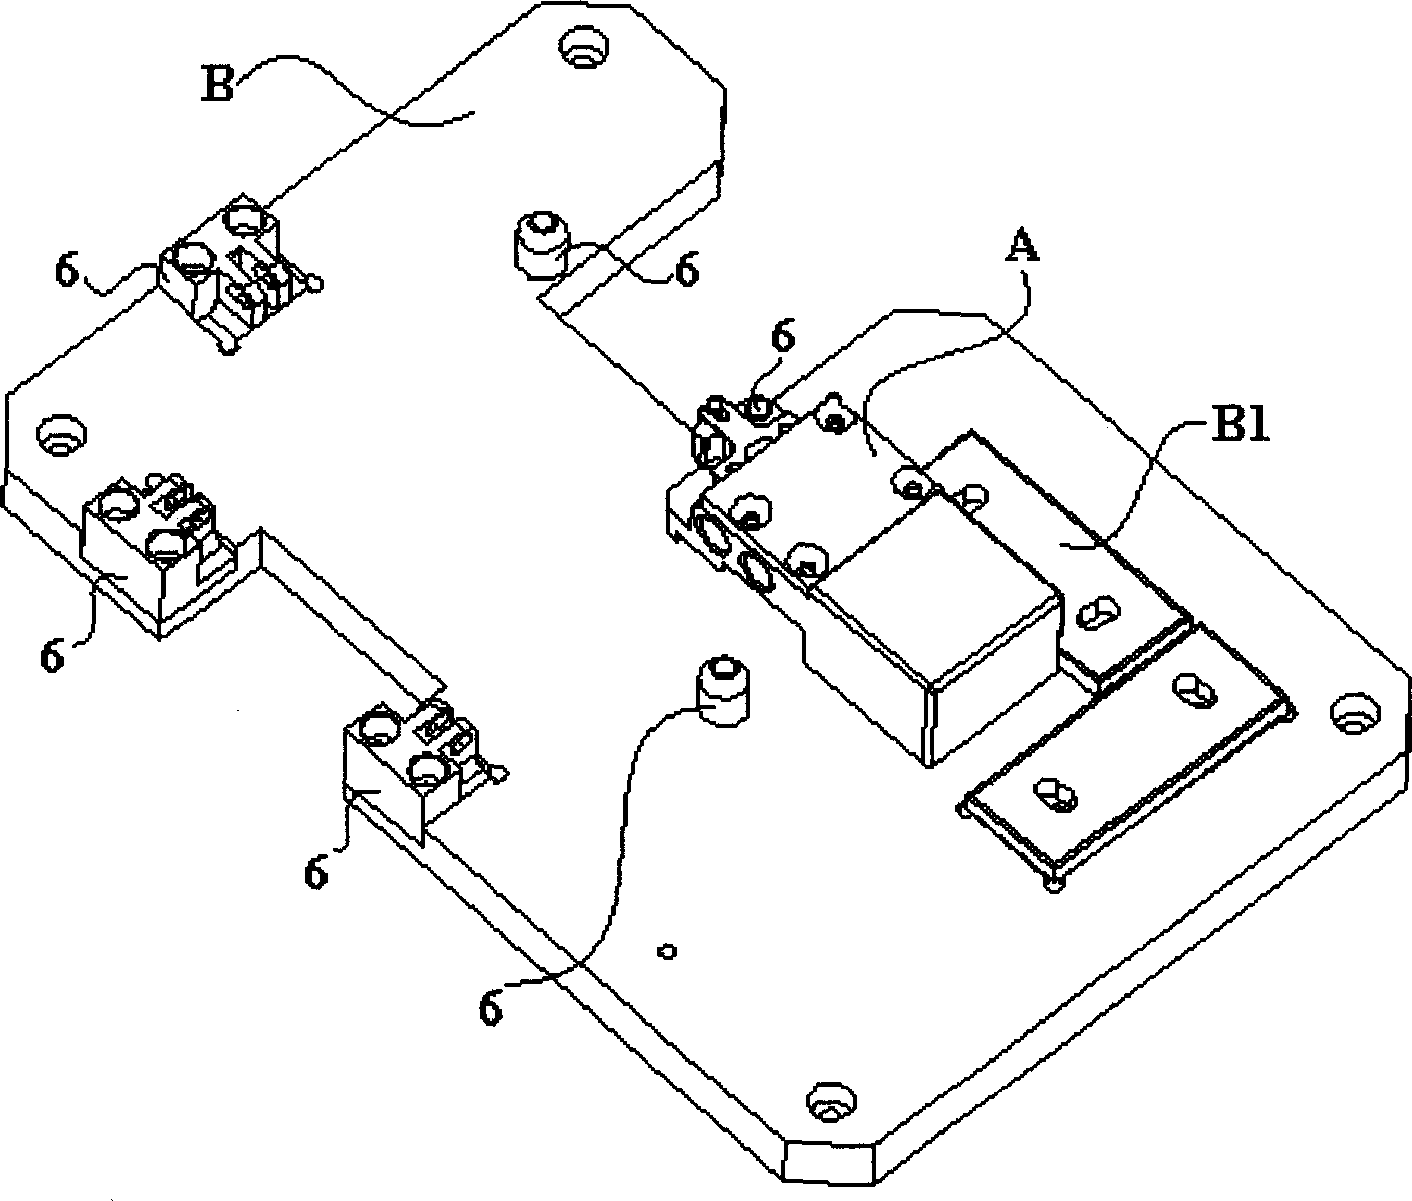 Skew block mounting clamping apparatus